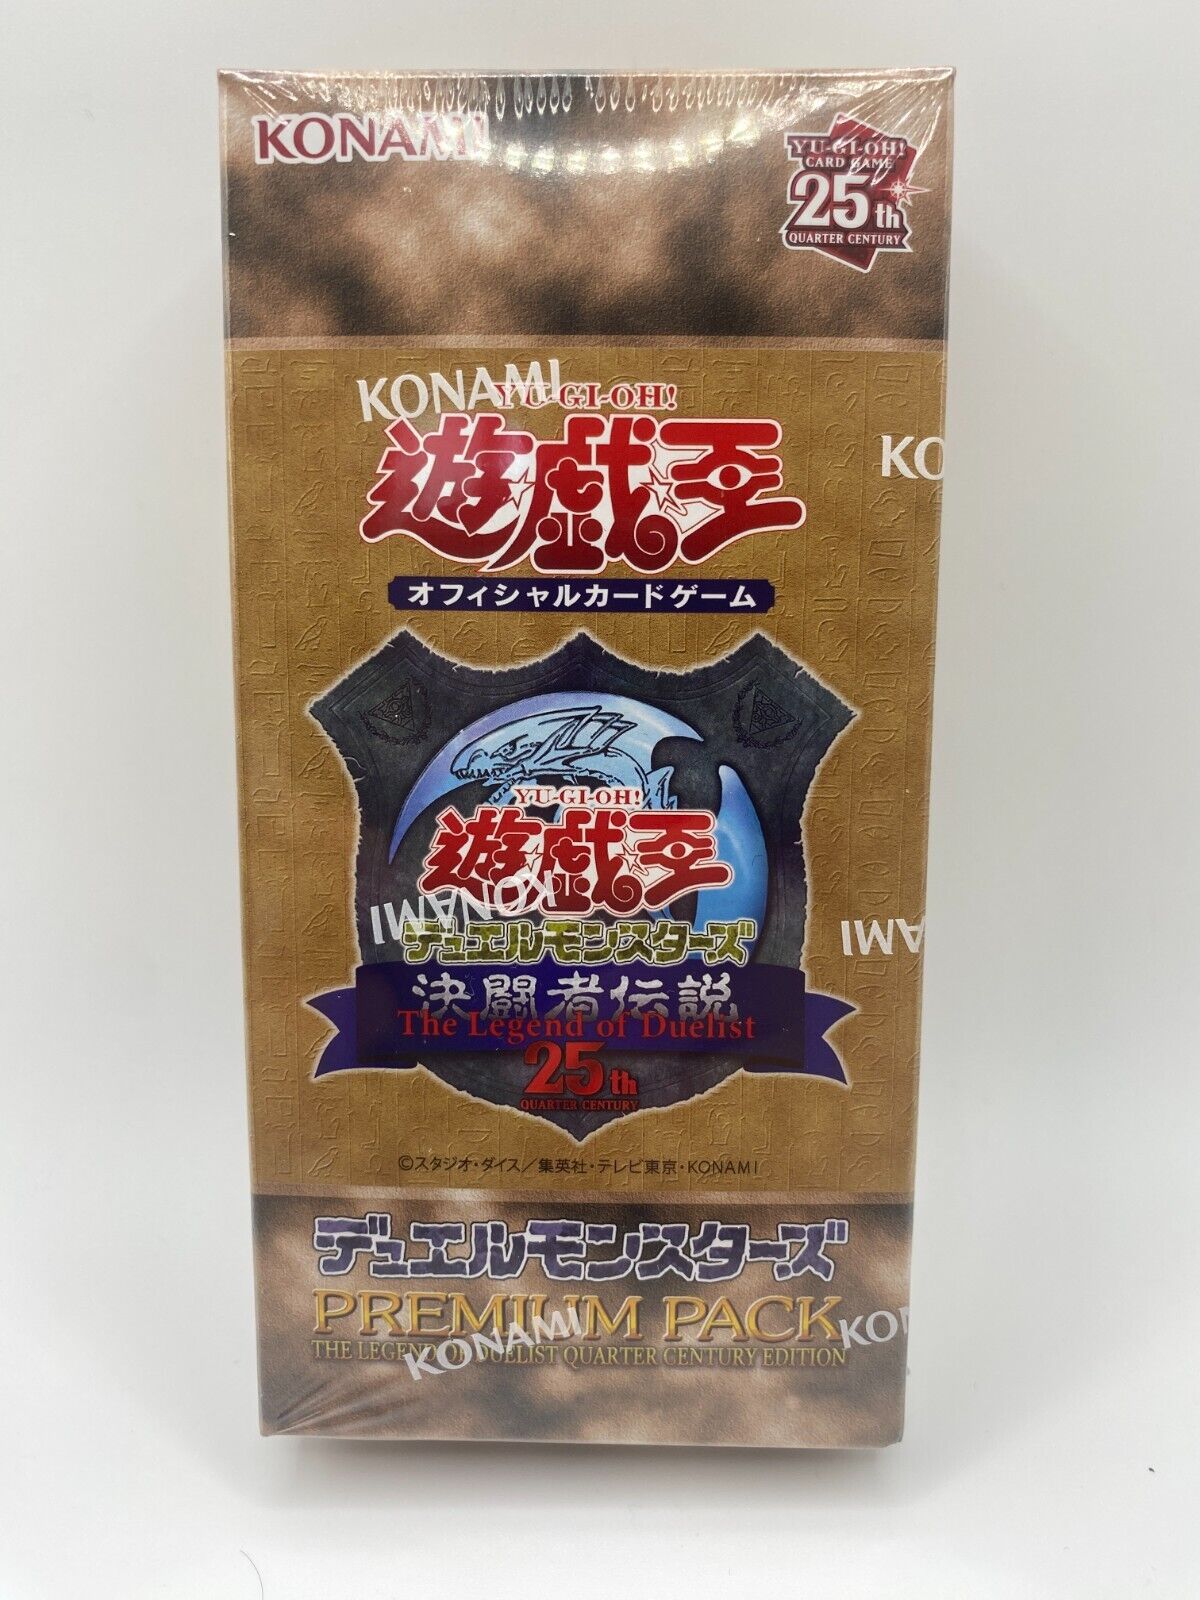 Yu-Gi-Oh Yugioh OCG 25th Premium pack Legend of Duelist QUARTER CENTURY EDITION